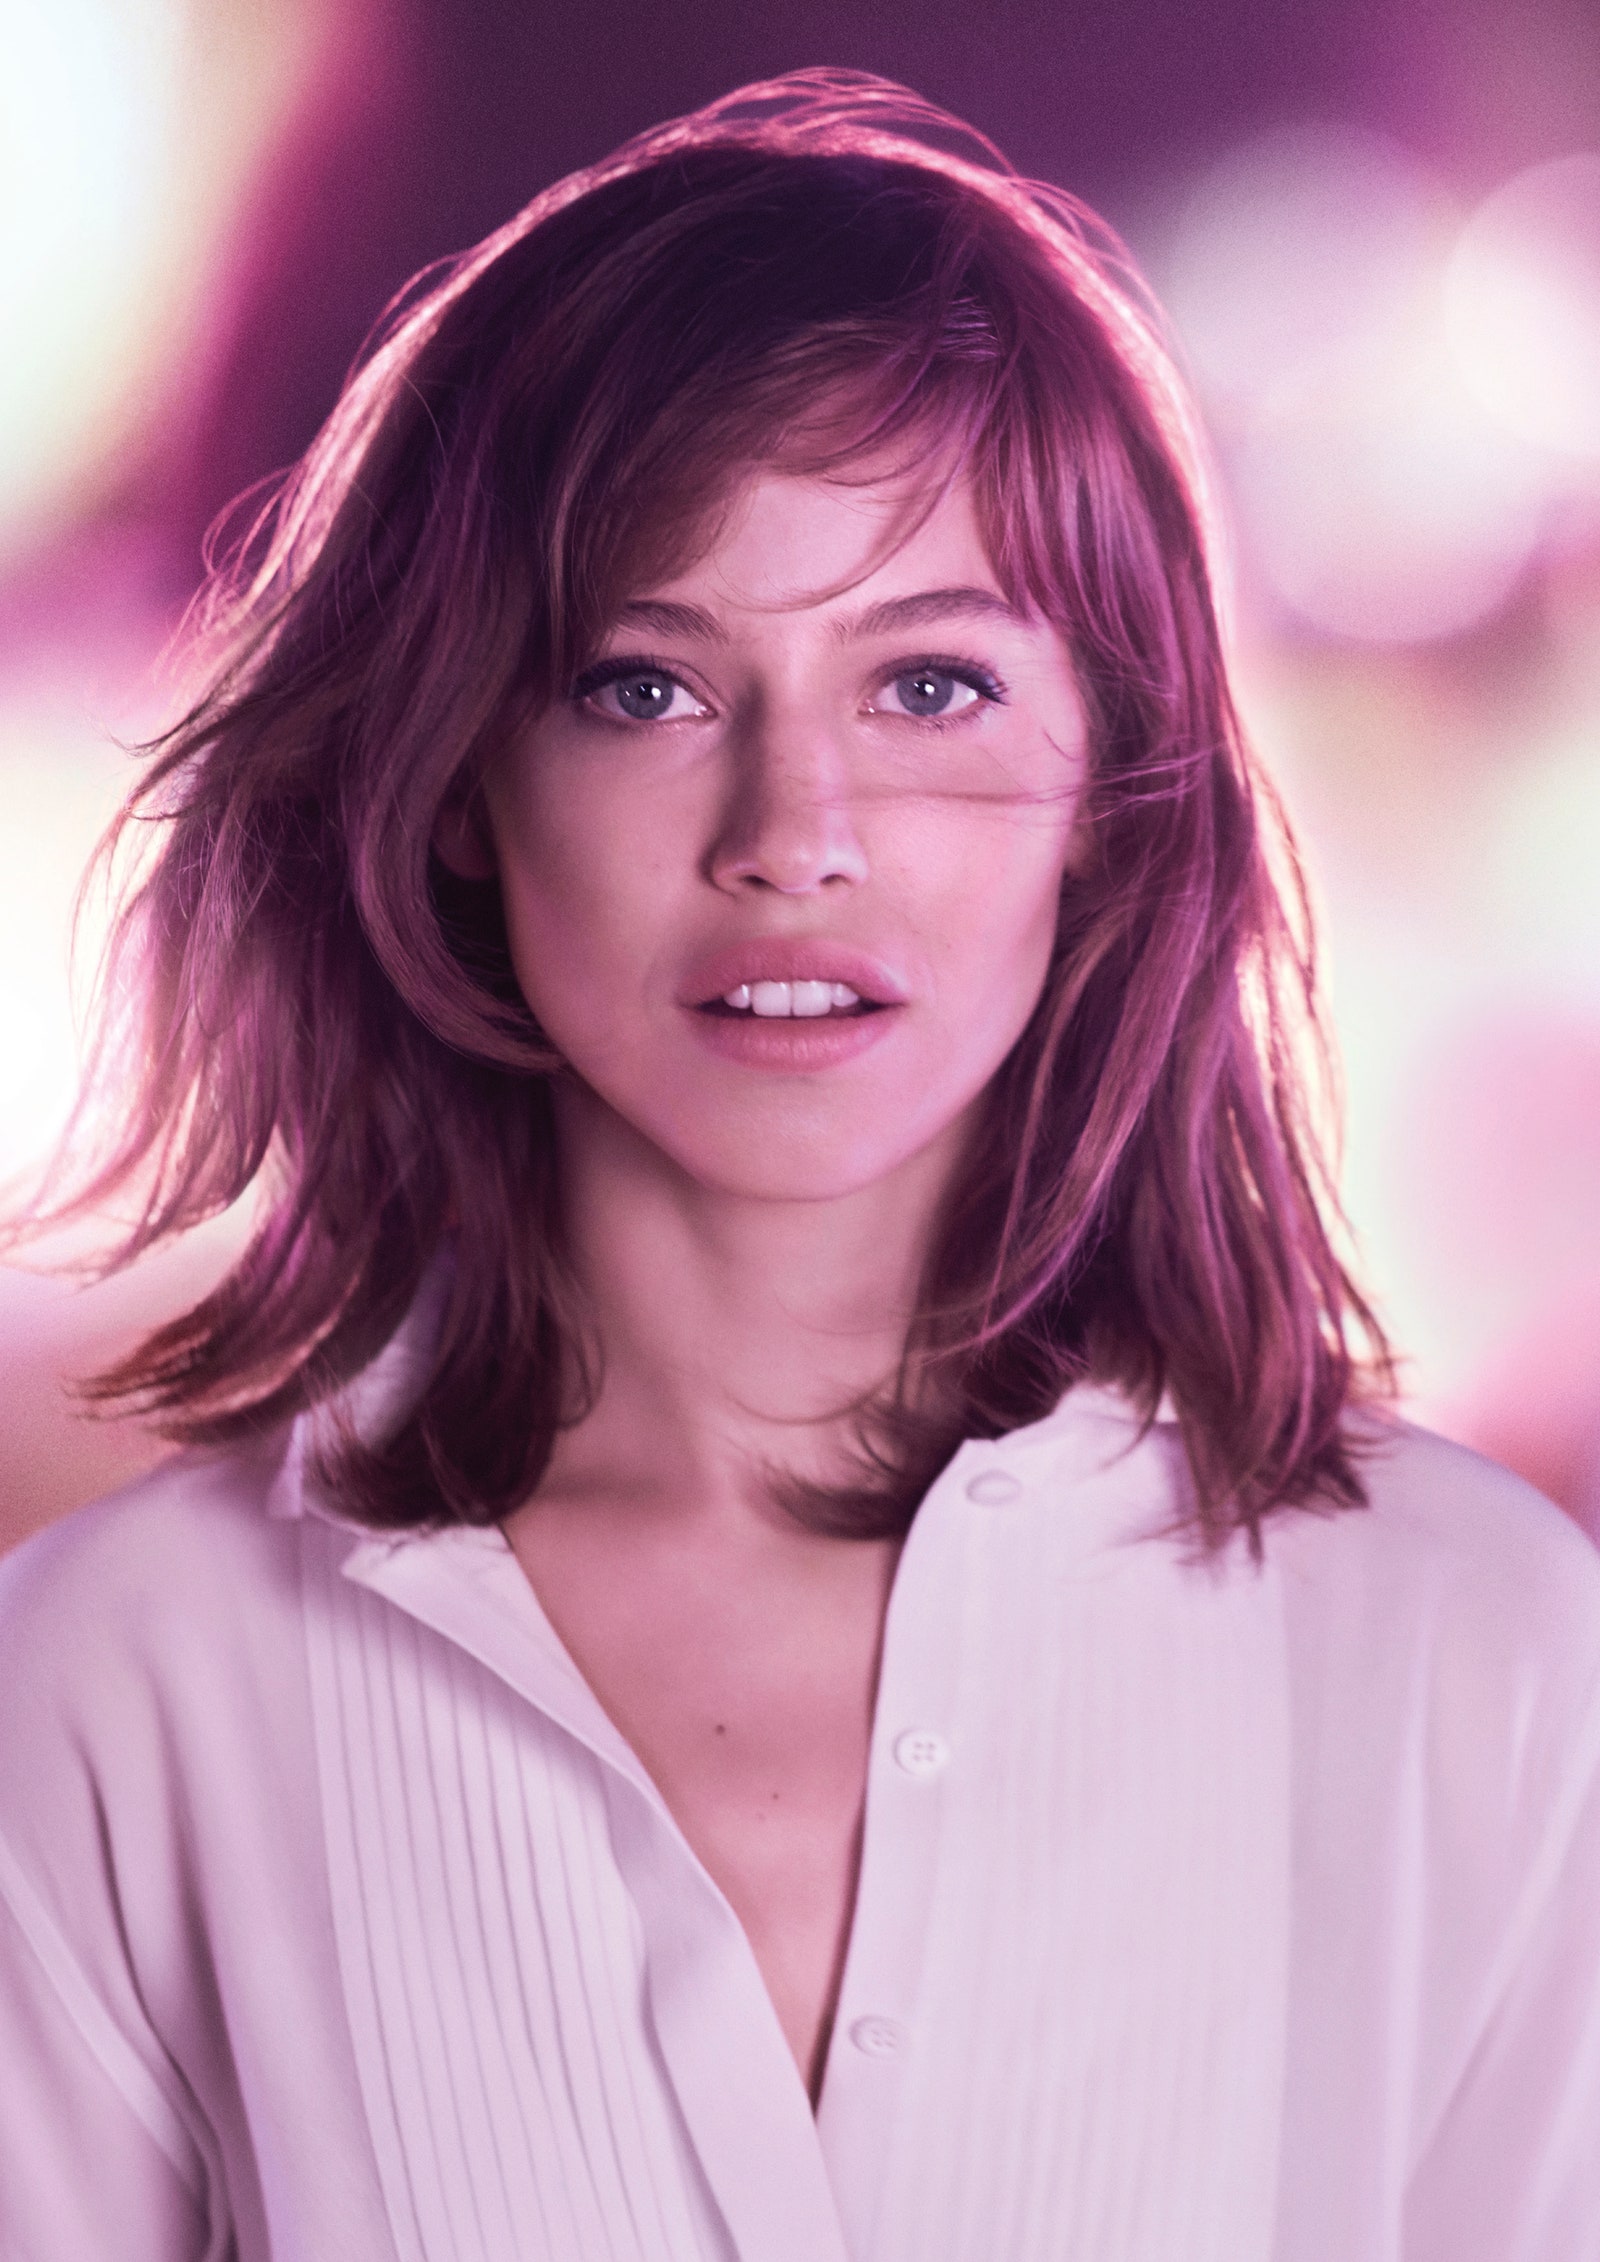 Givenchy представляет новую версию аромата Live Irrsistible — Blossom Crush